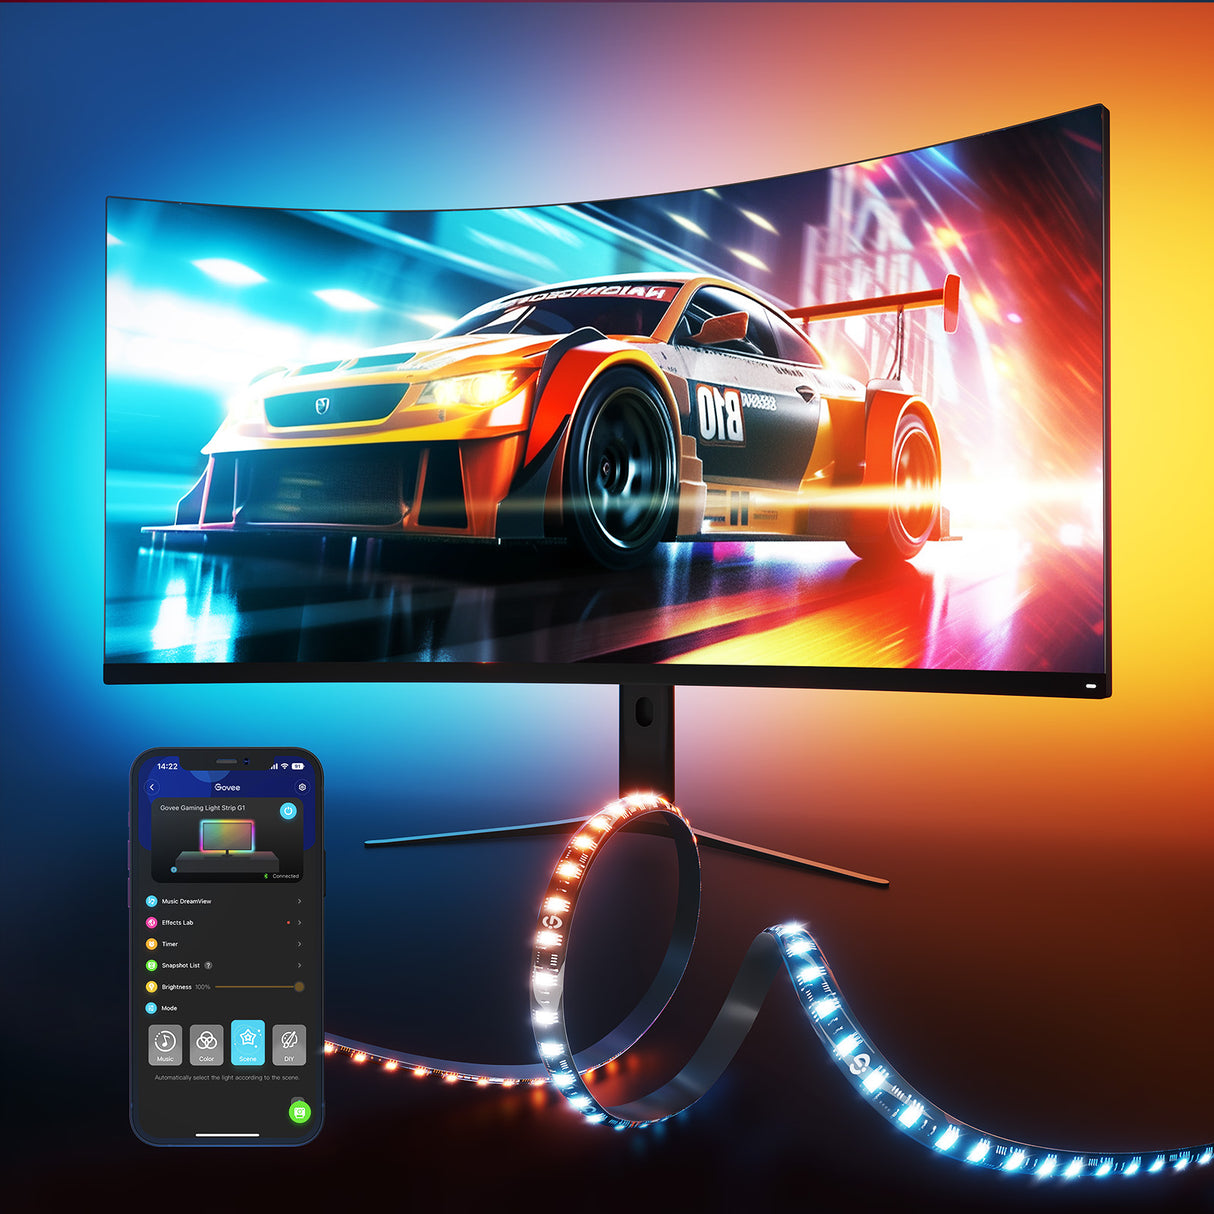 Govee Gaming Monitor Light Strip G1 - Smart LED Backlight 27-34" Monitors